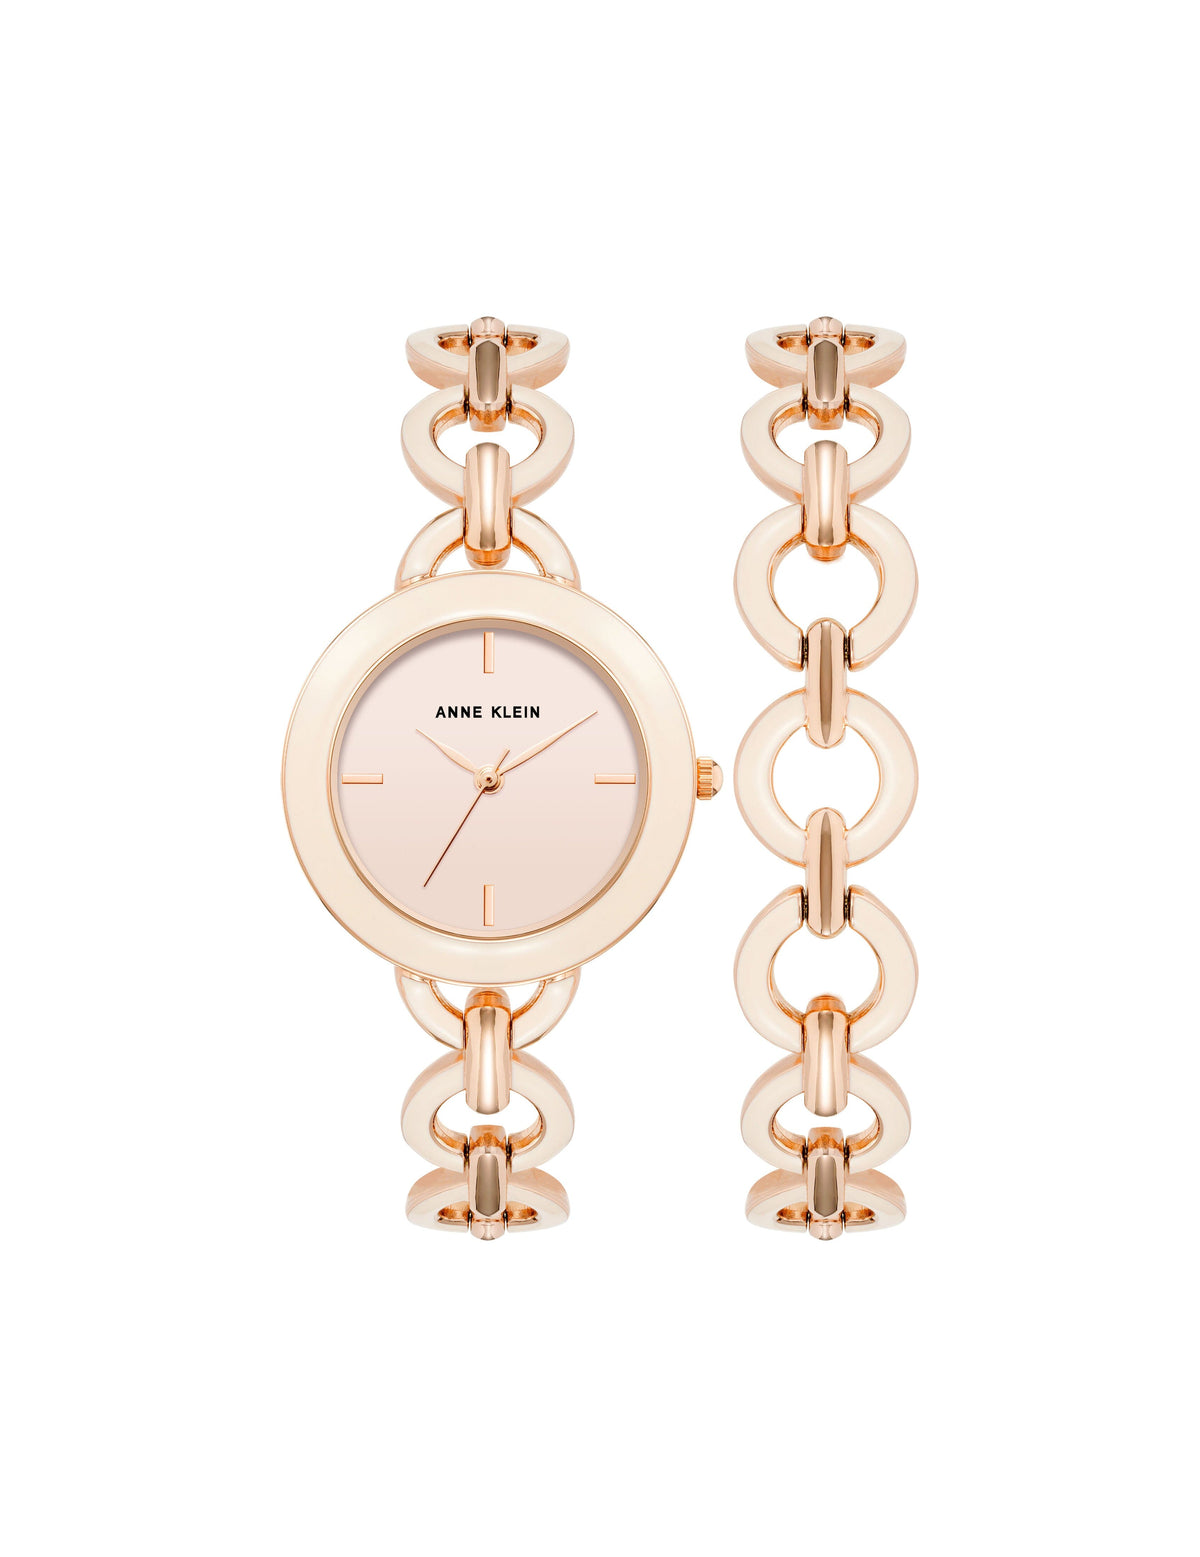 Anne Klein Blush Pink/ Rose Gold Tone Boyfriend Circular Link Bracelet Watch Set